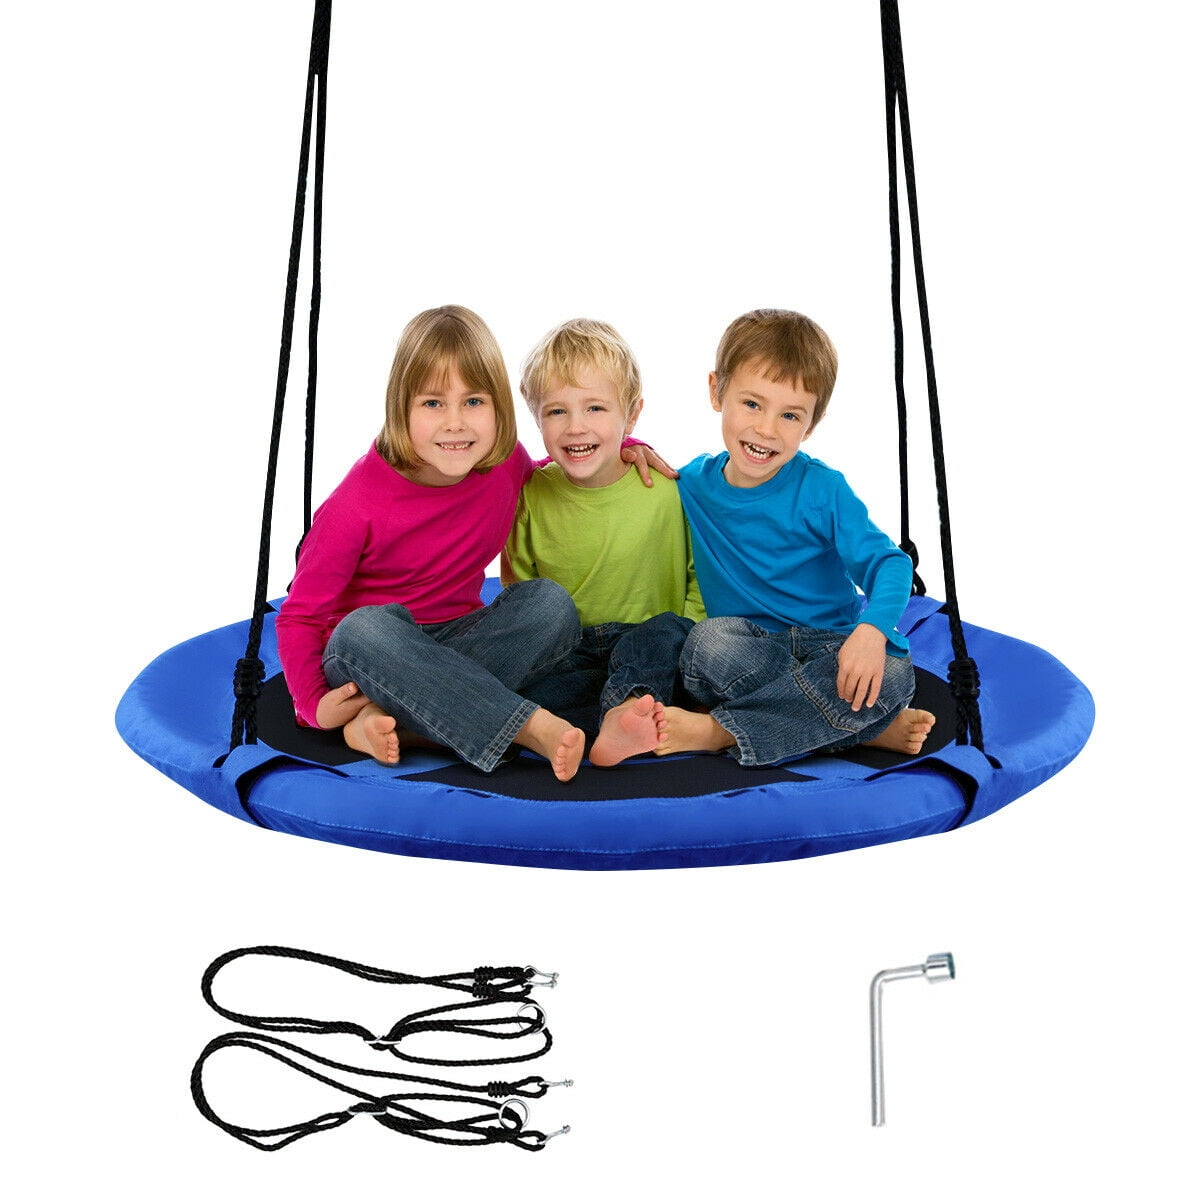 Costway Goplus 40'' Flying Saucer Tree Swing Indoor Outdoor Play Set Kids Christmas Gift Blue